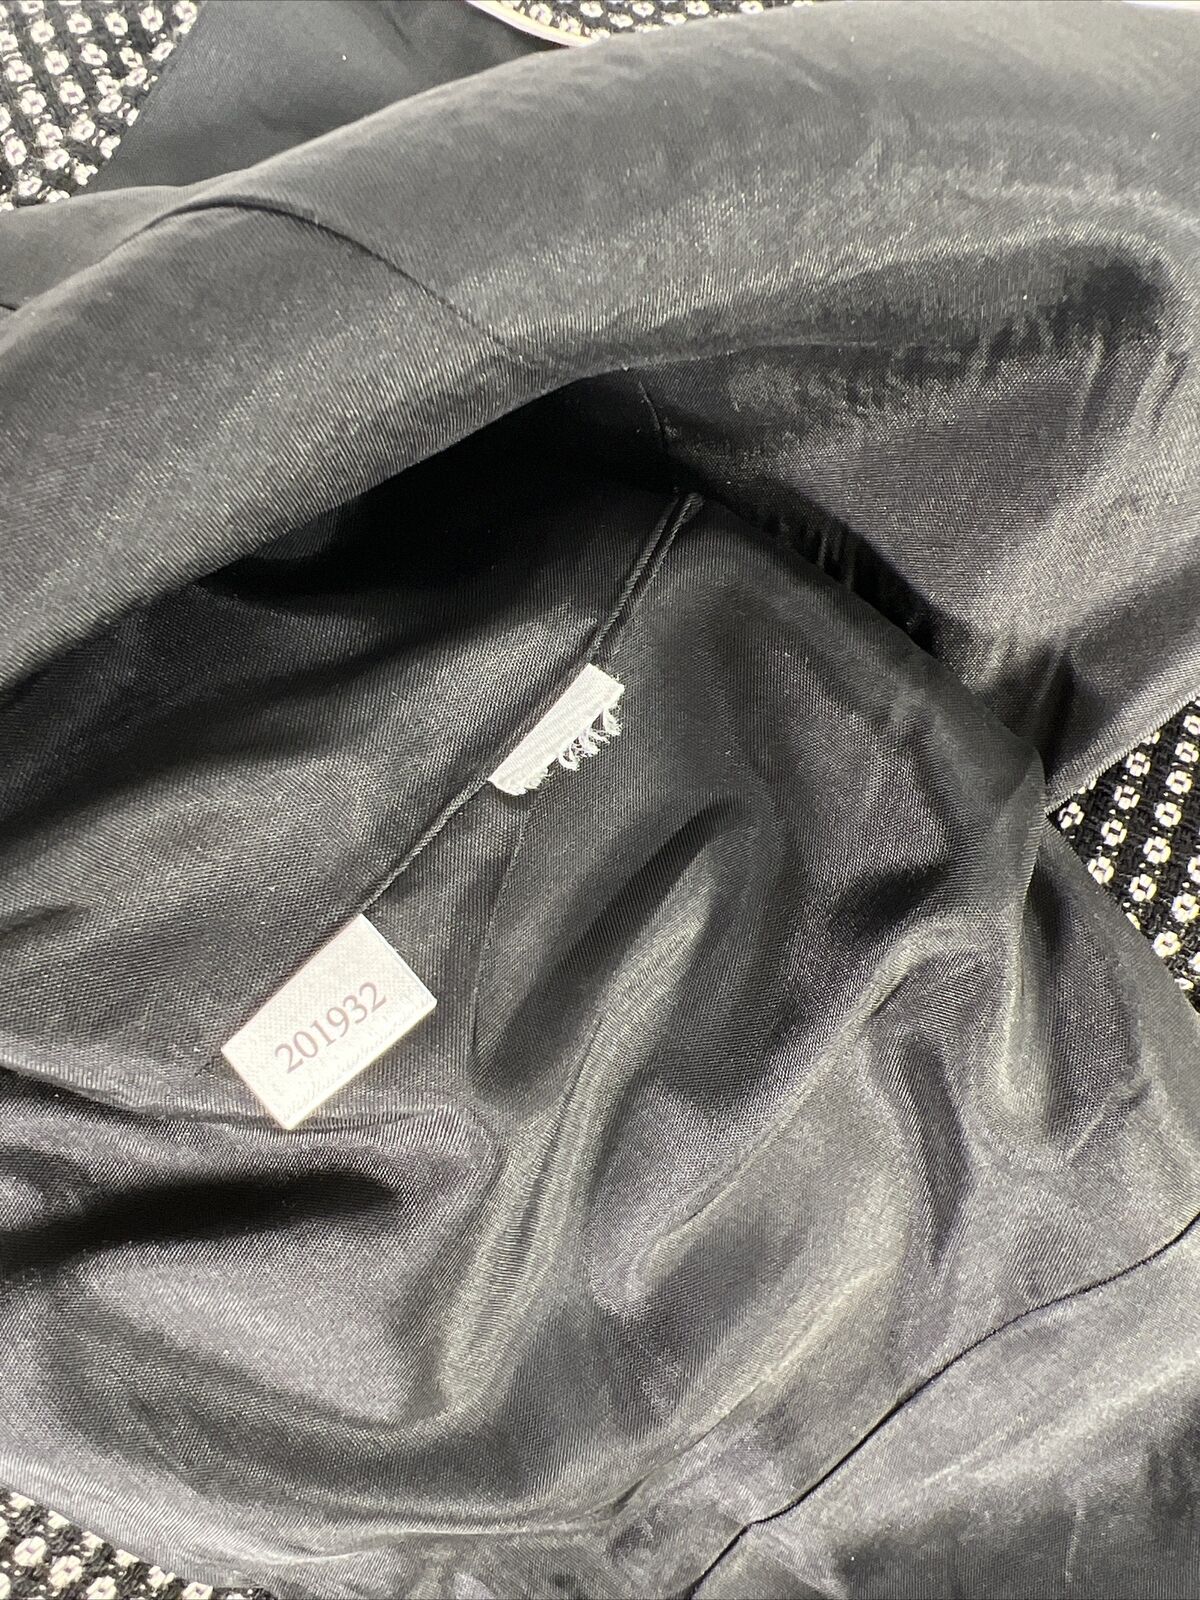 Ann Taylor Women's Black 3-Button Lined Dress Jacket - 4